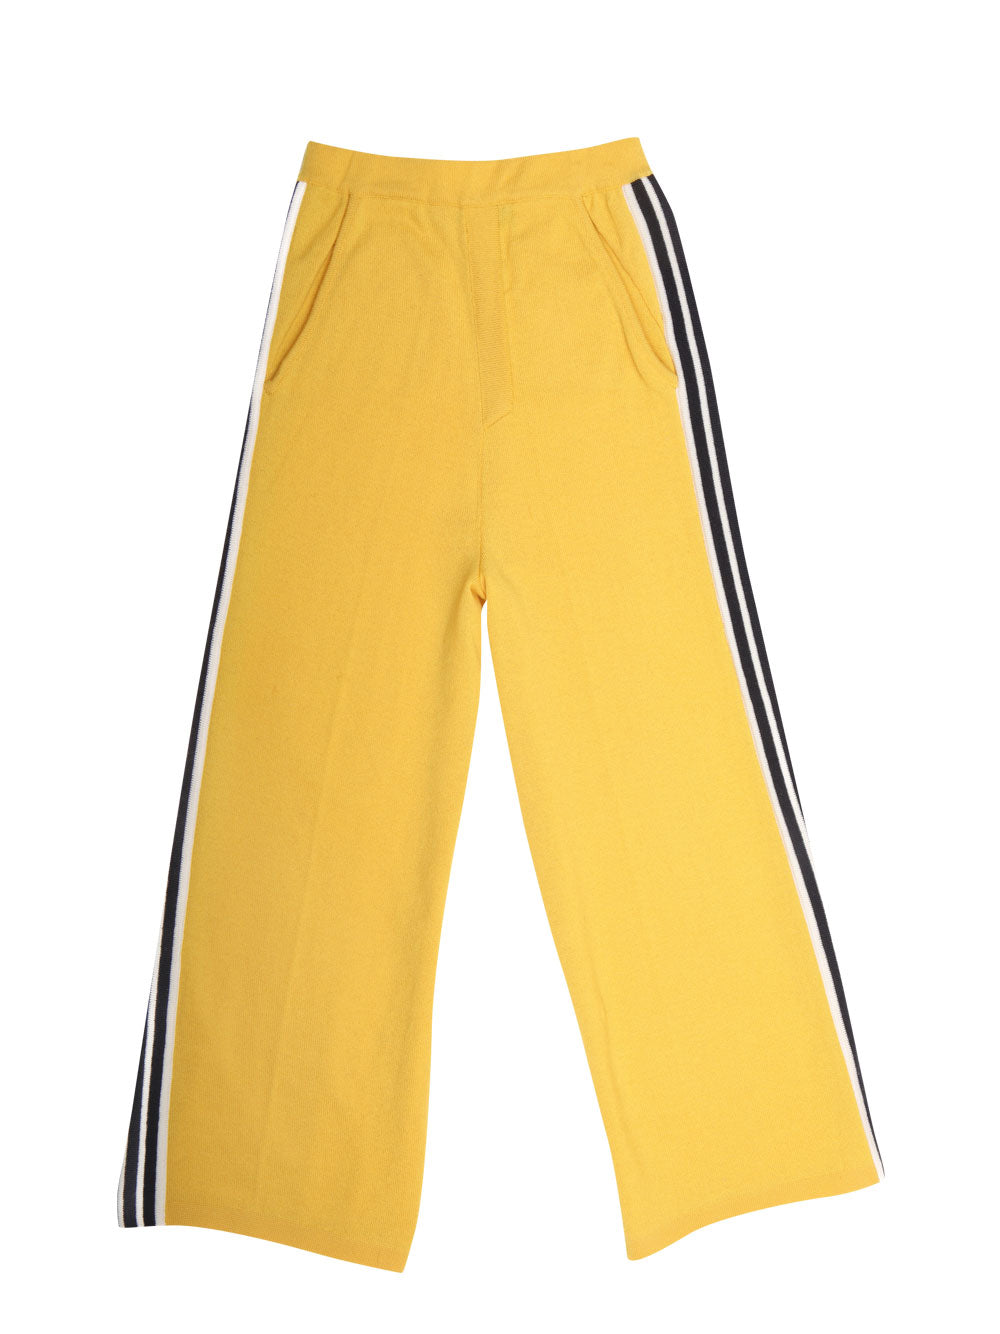 Yellow Large Pants